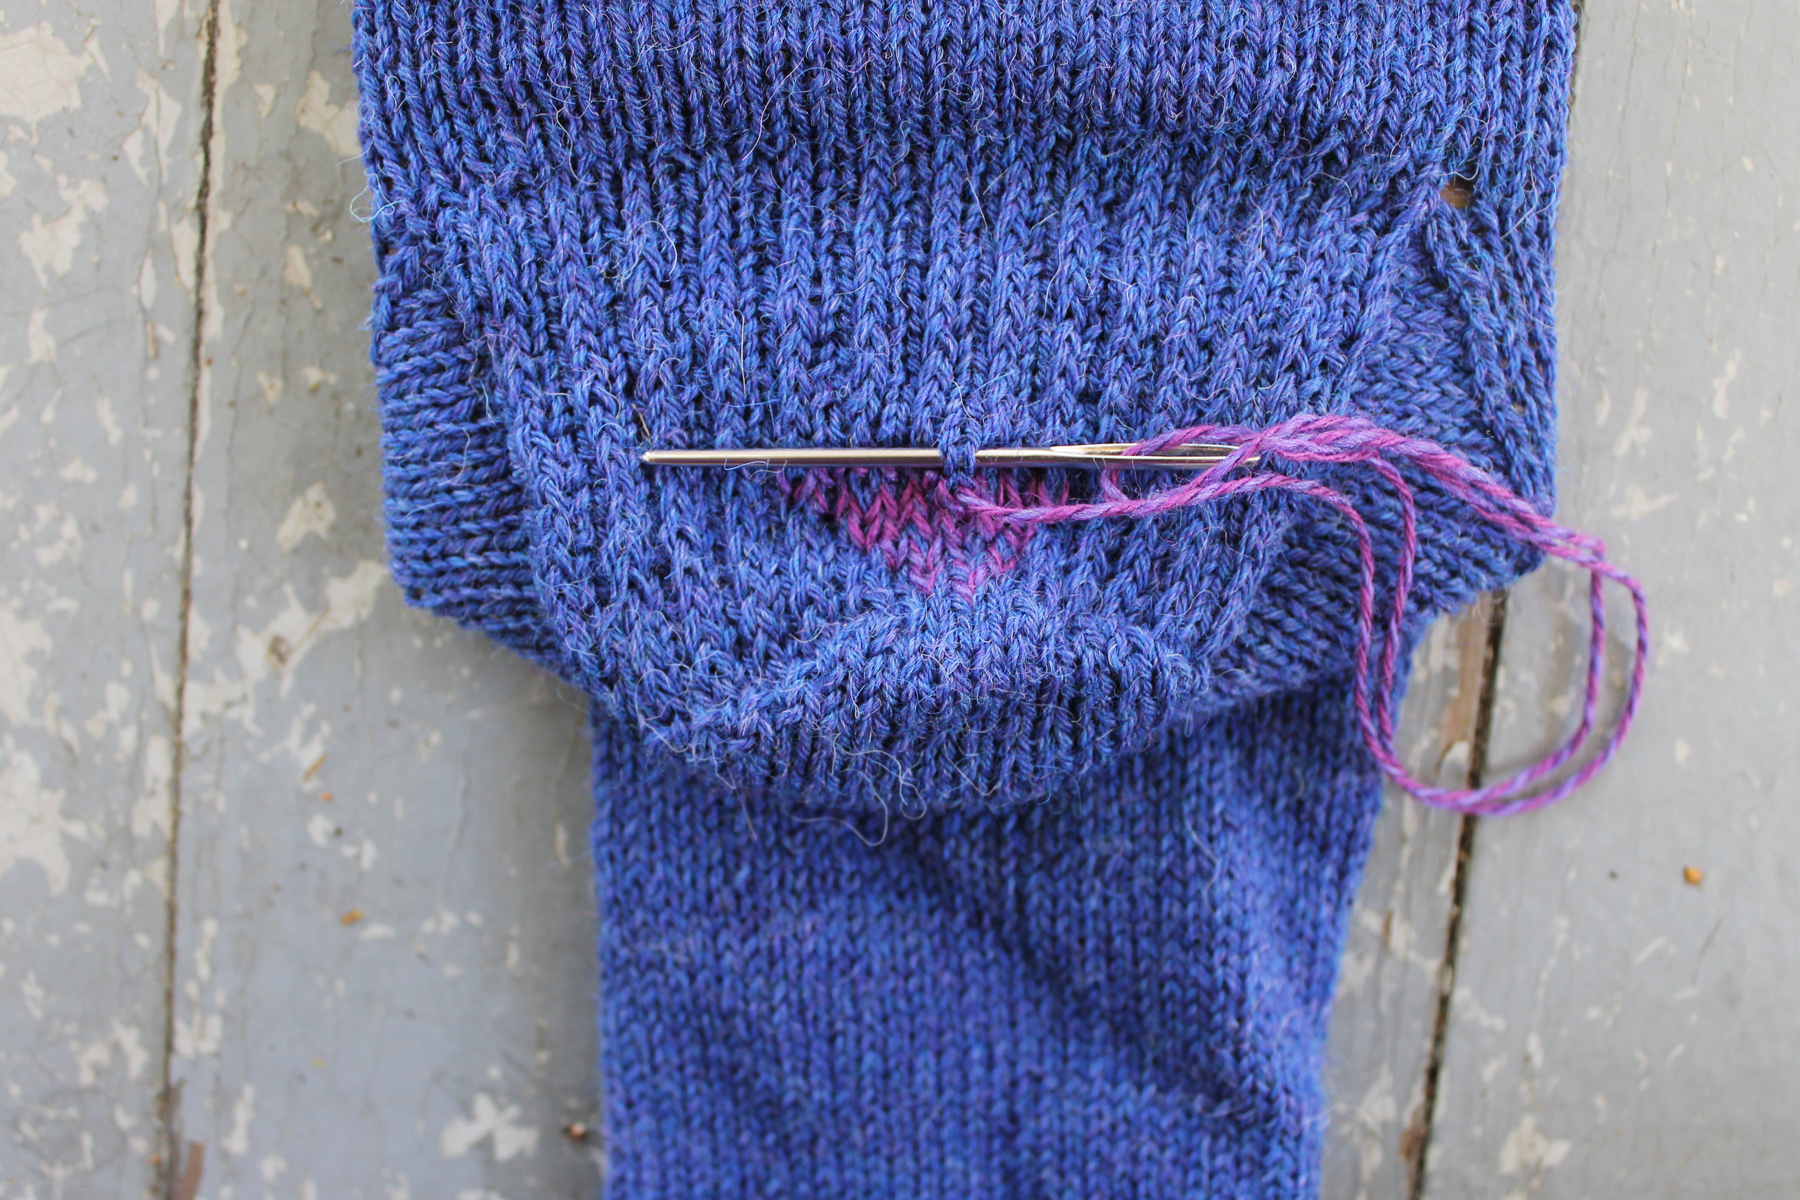 Sock heel duplicate stitch in progress